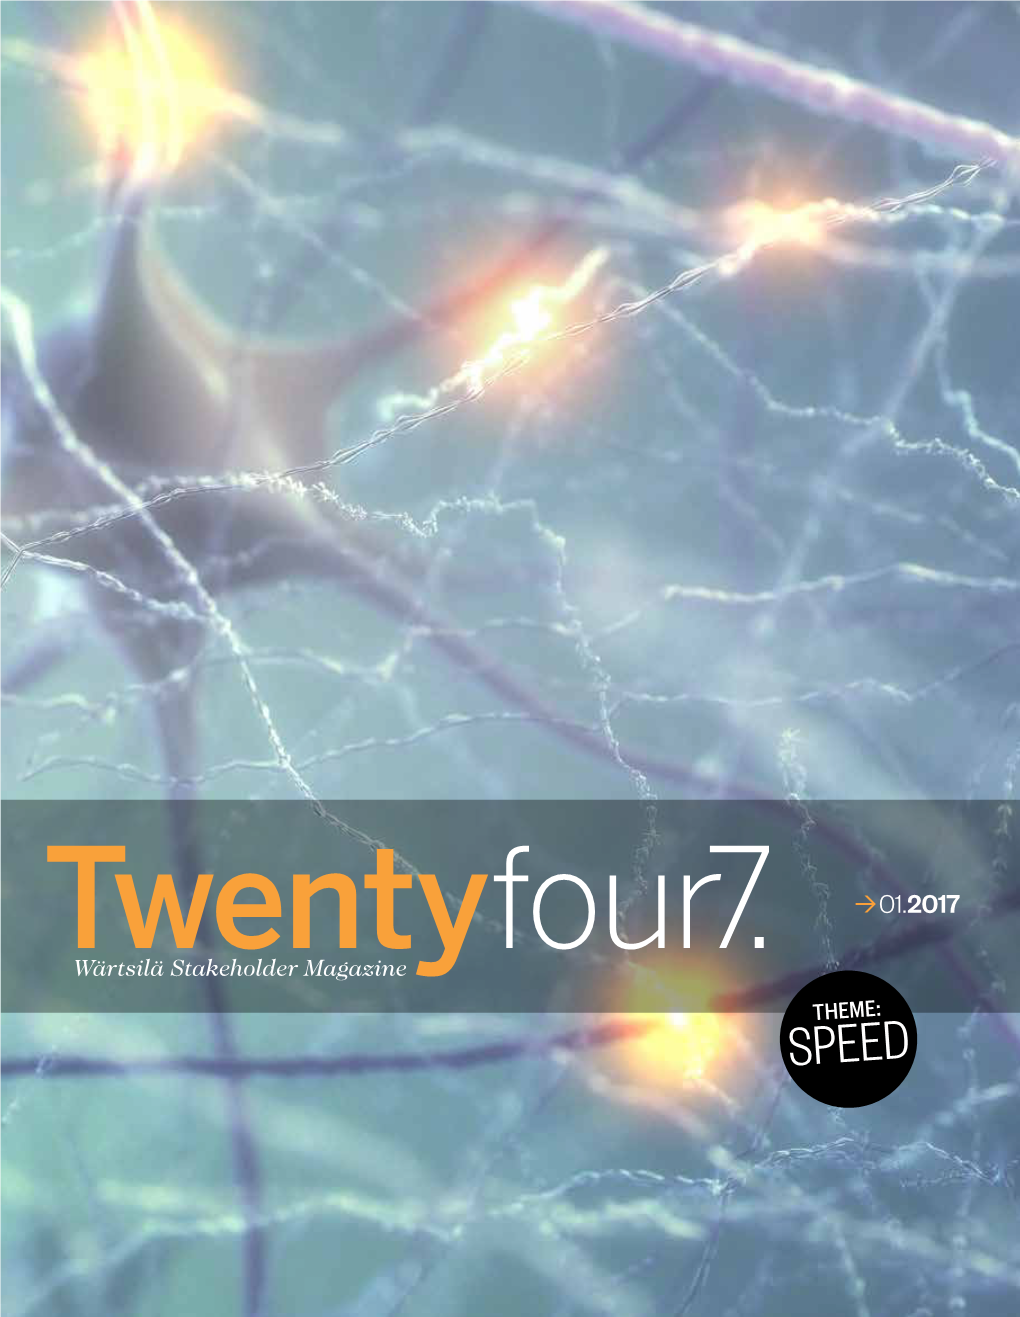 Twentyfour7. Stakeholder Magazine